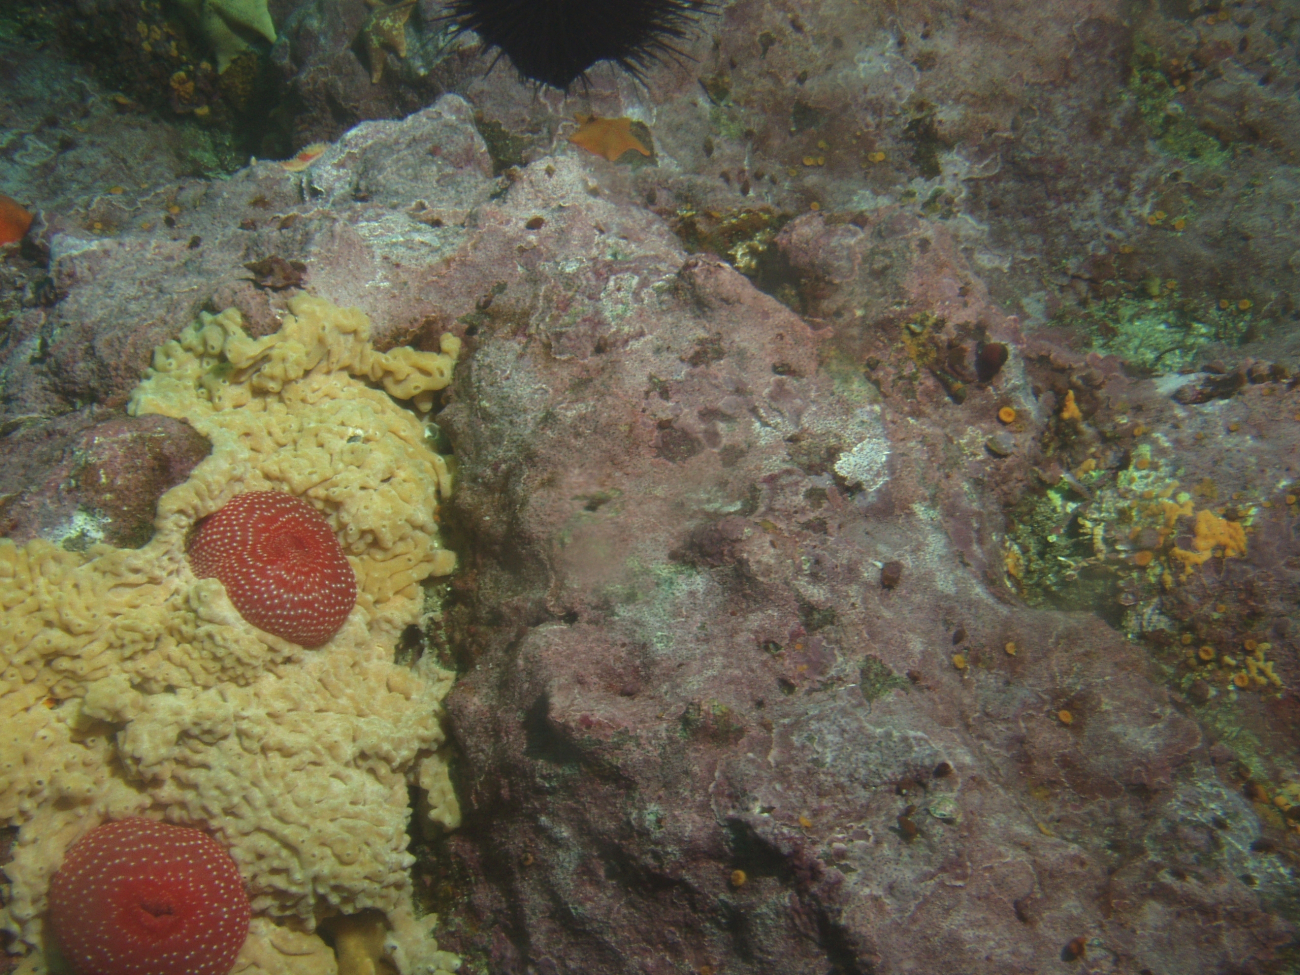 Unidentifed sea anemones and tunicatesat 25 meters depth